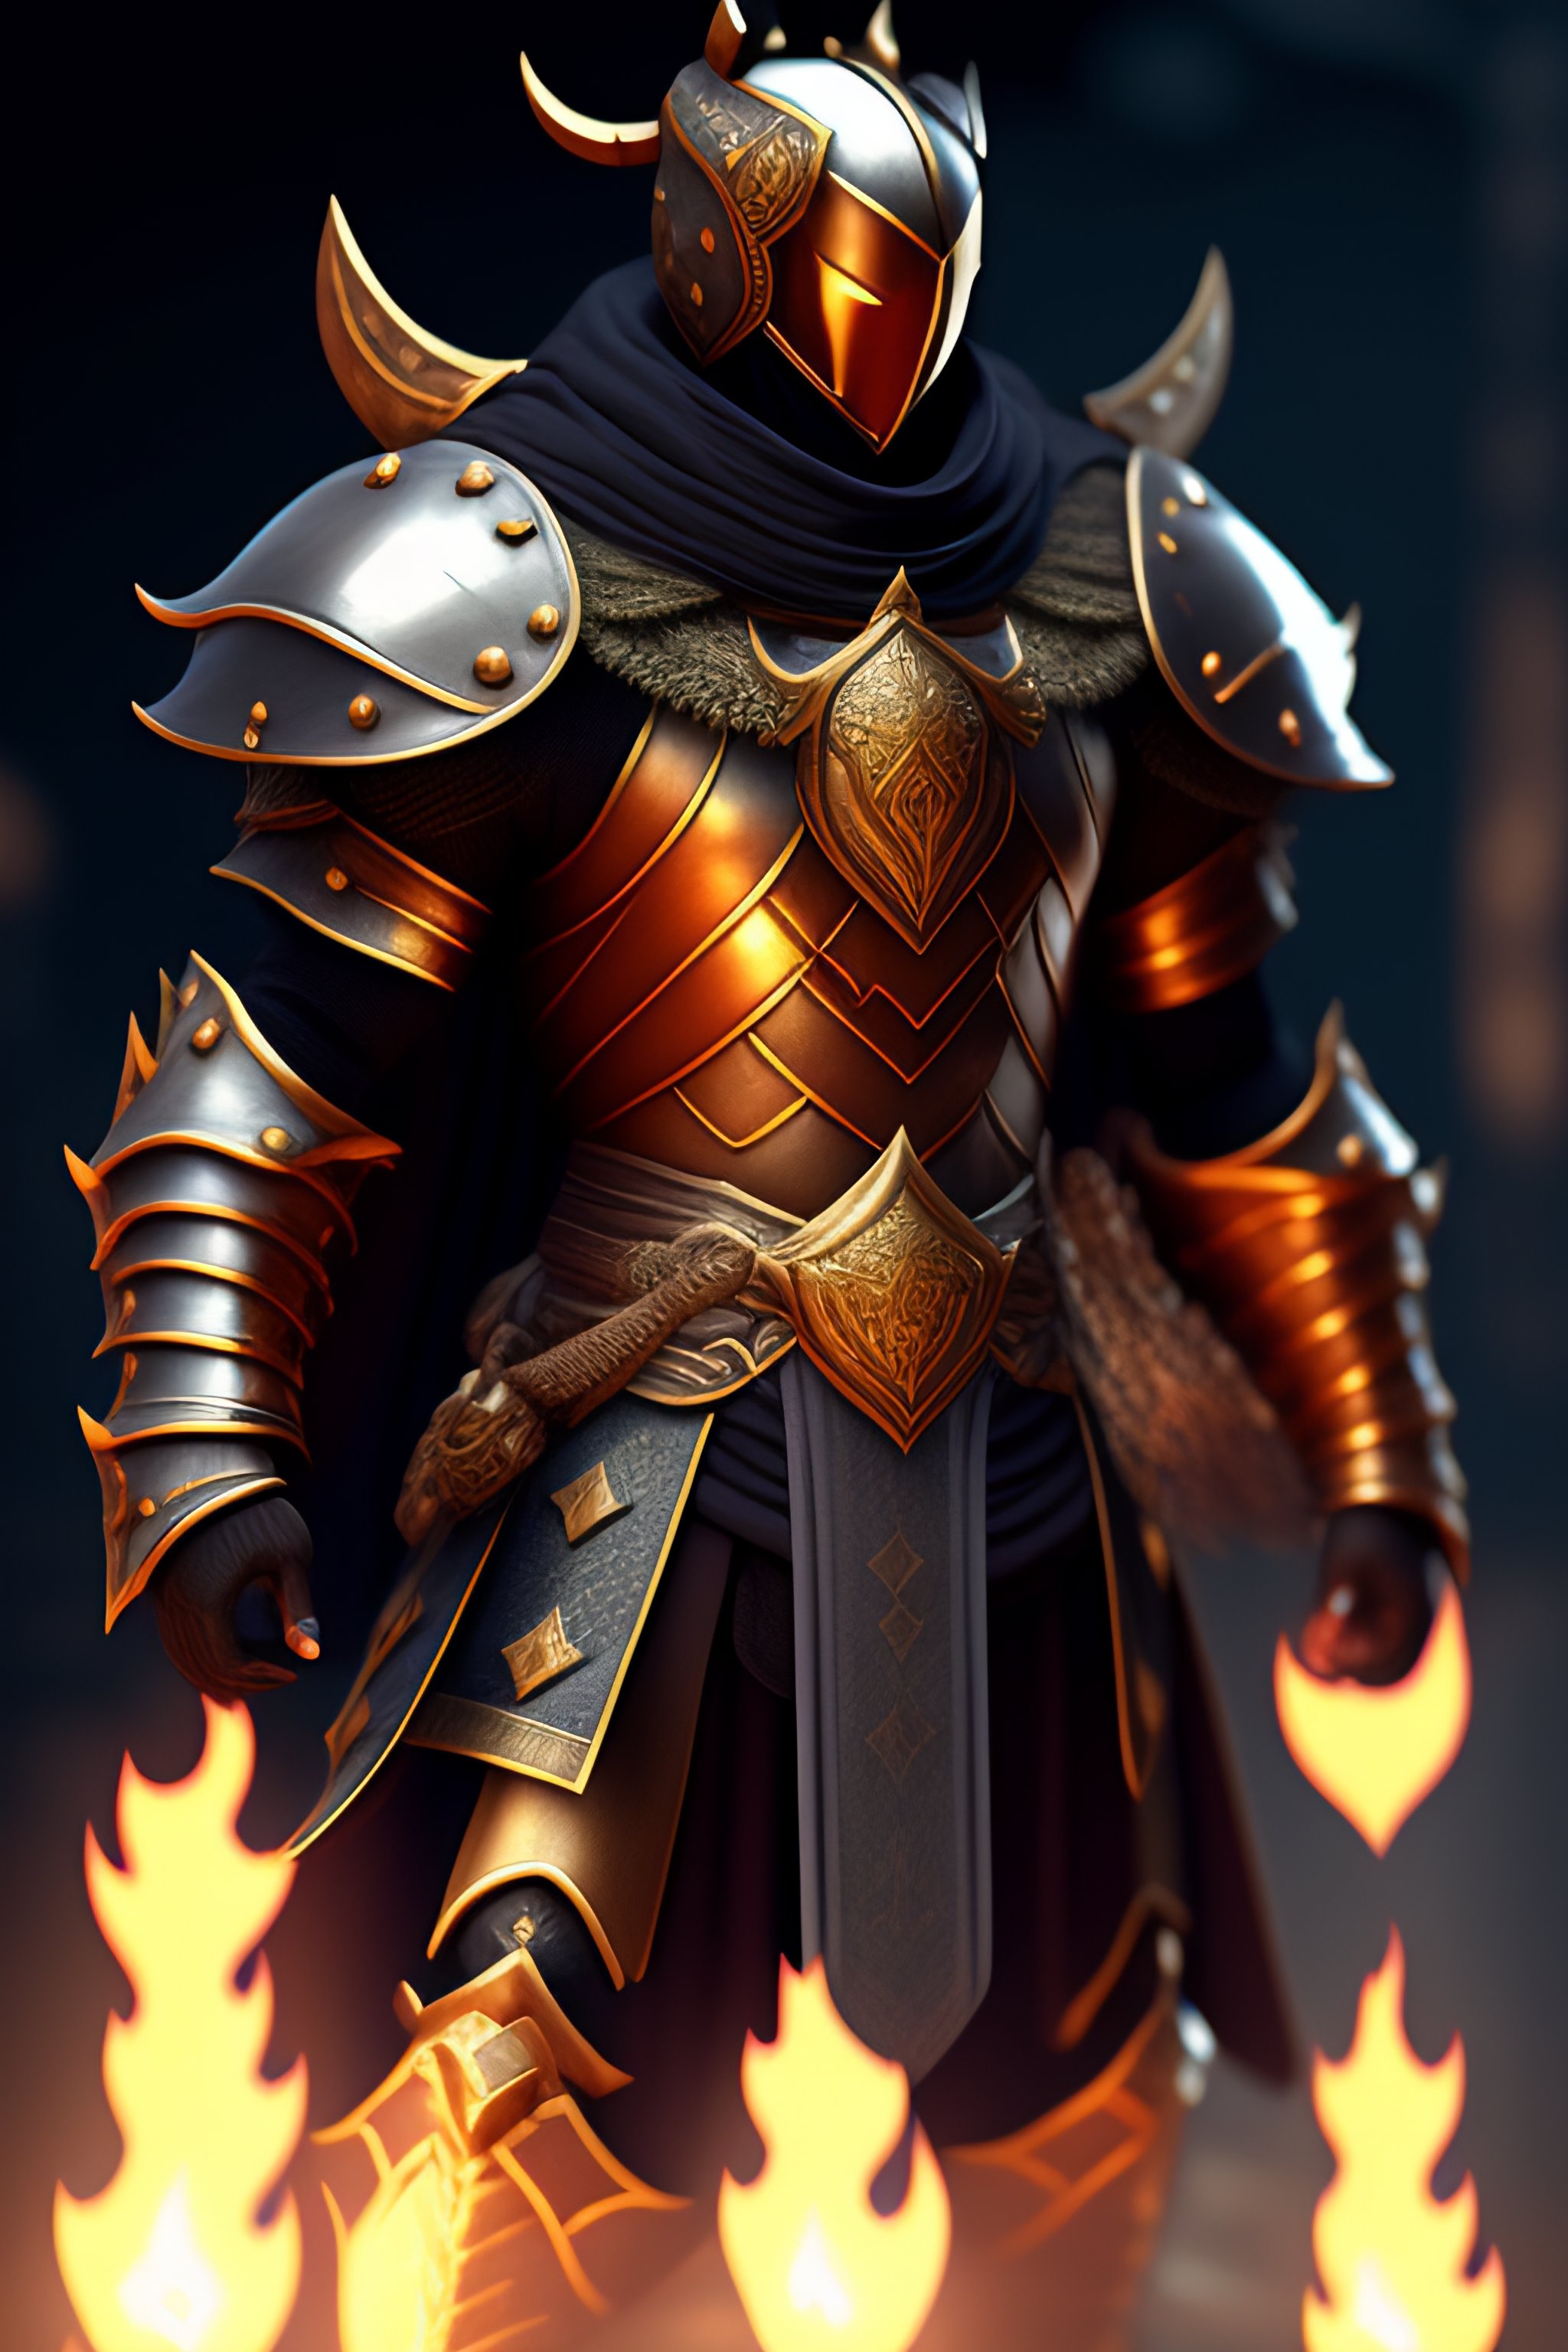 fire armor